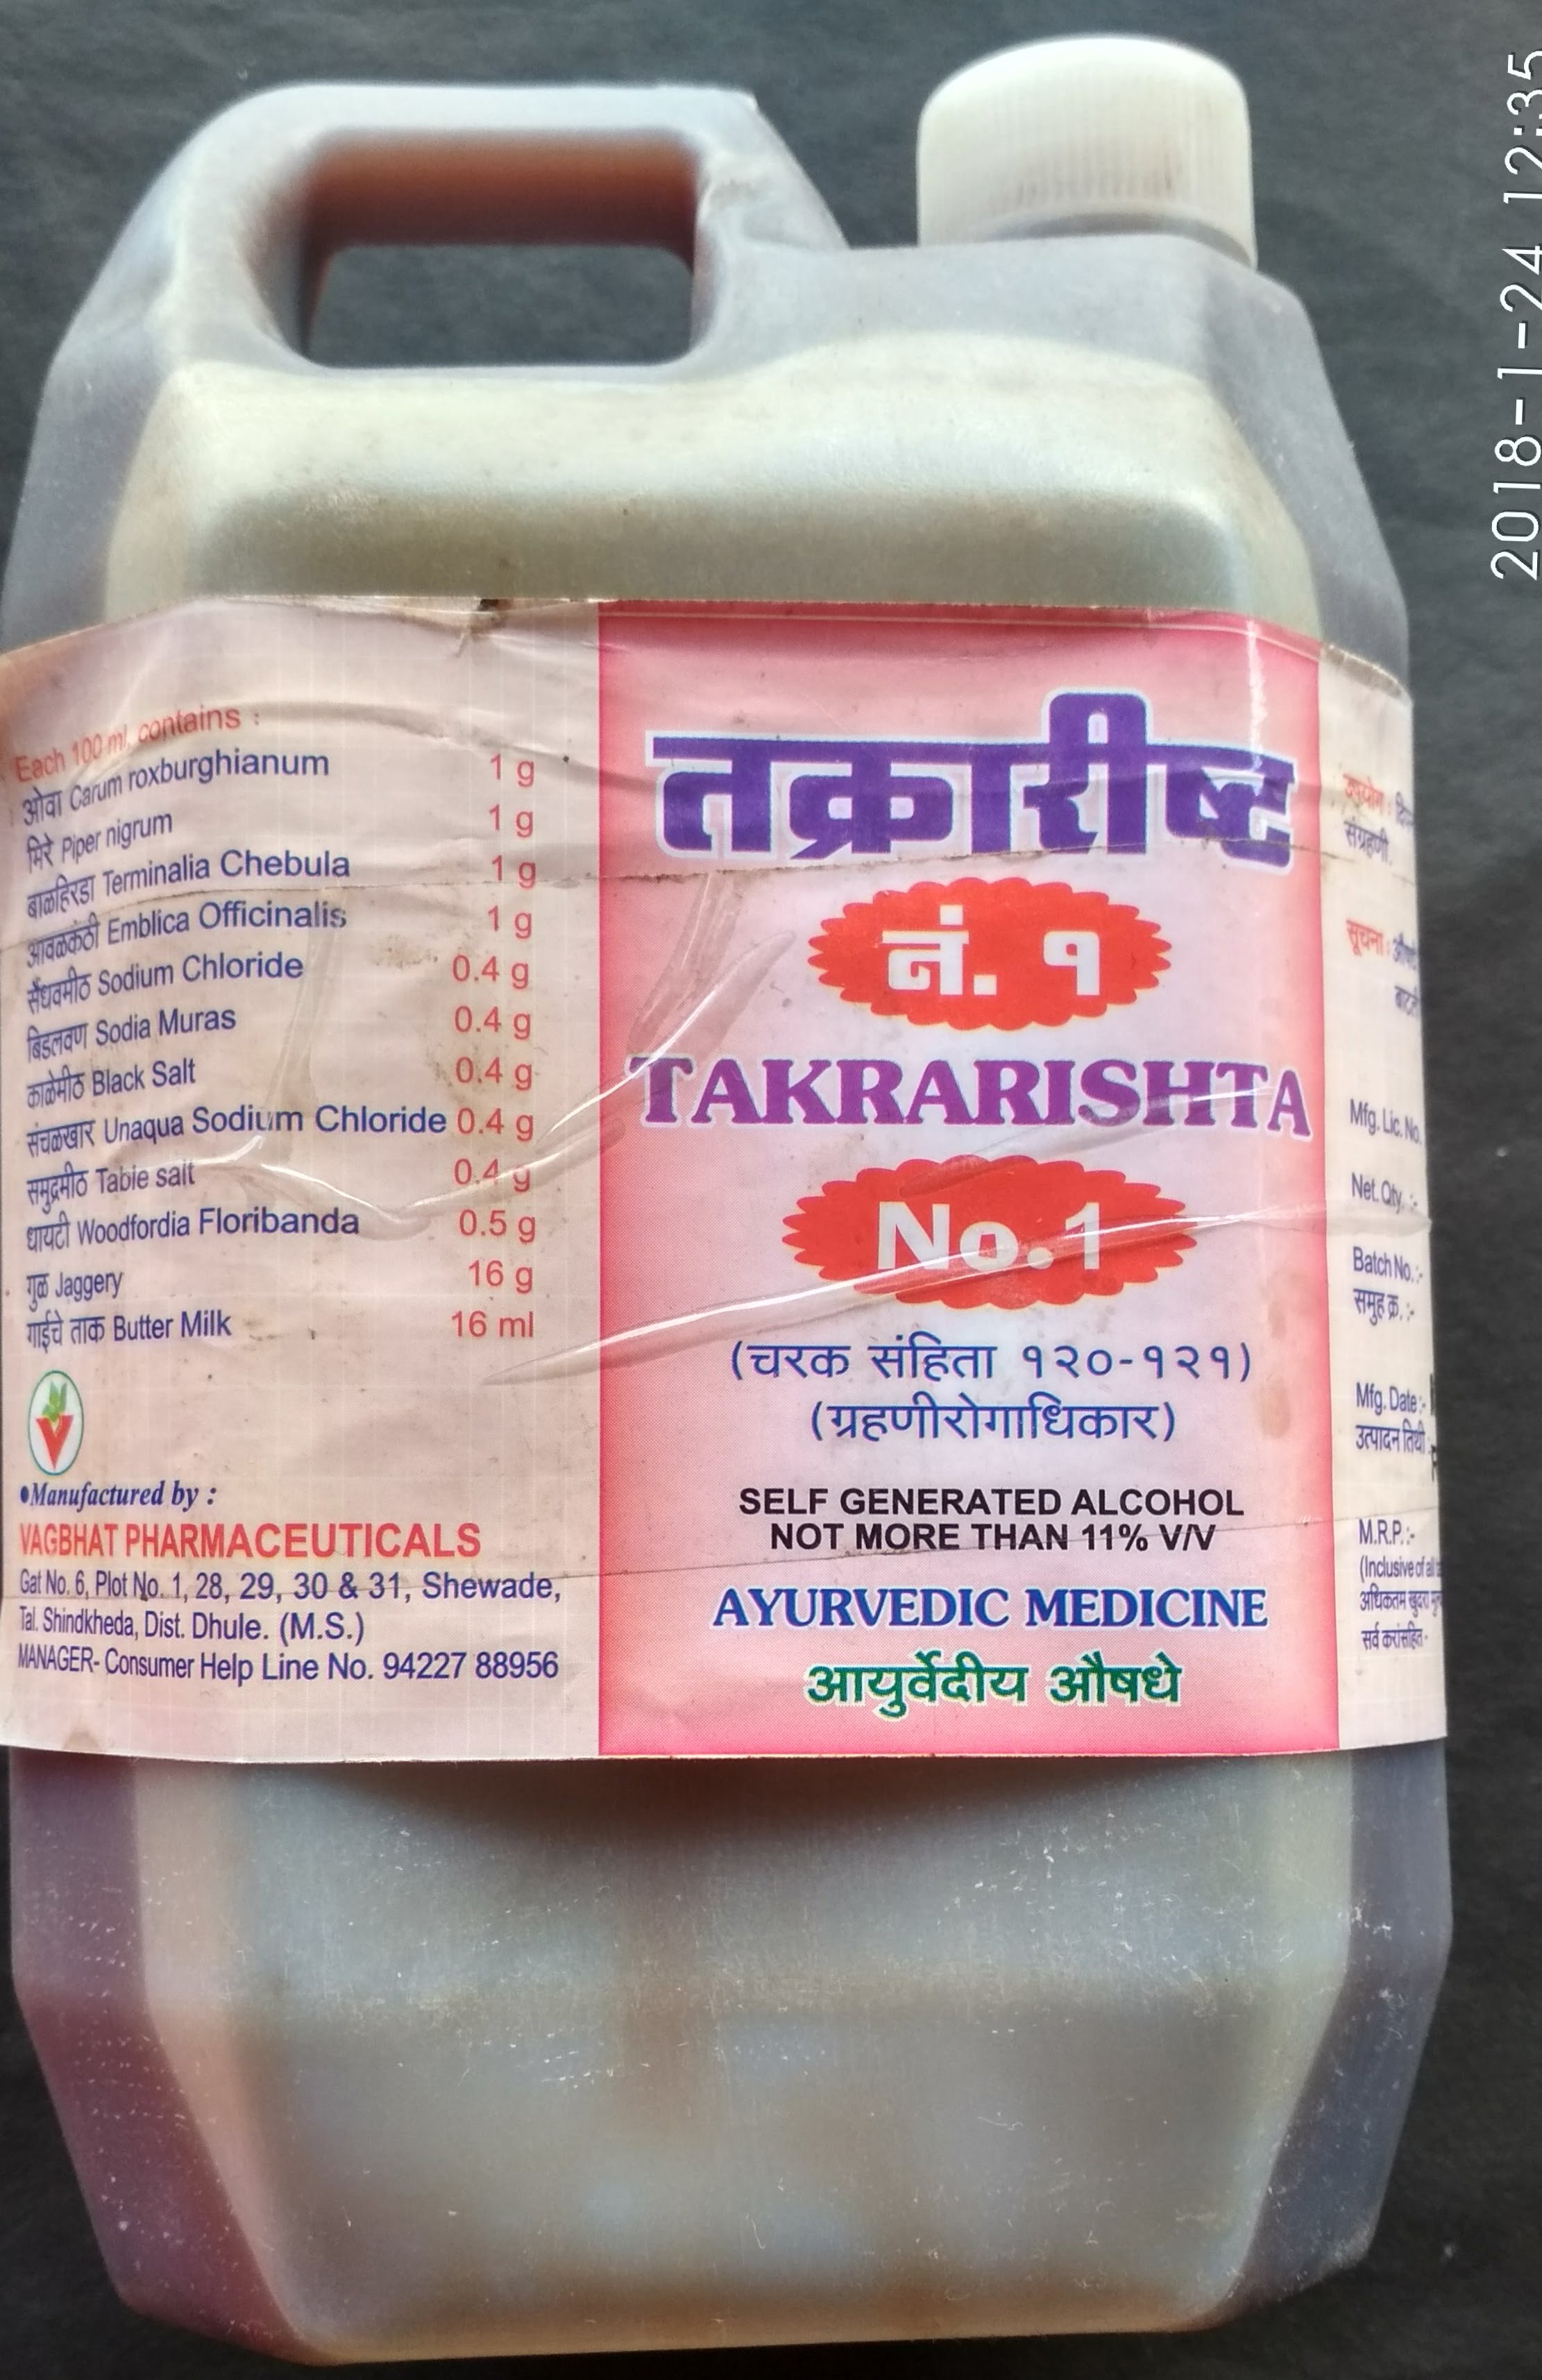 takrarishta no 1 1 lit vagbhat pharma